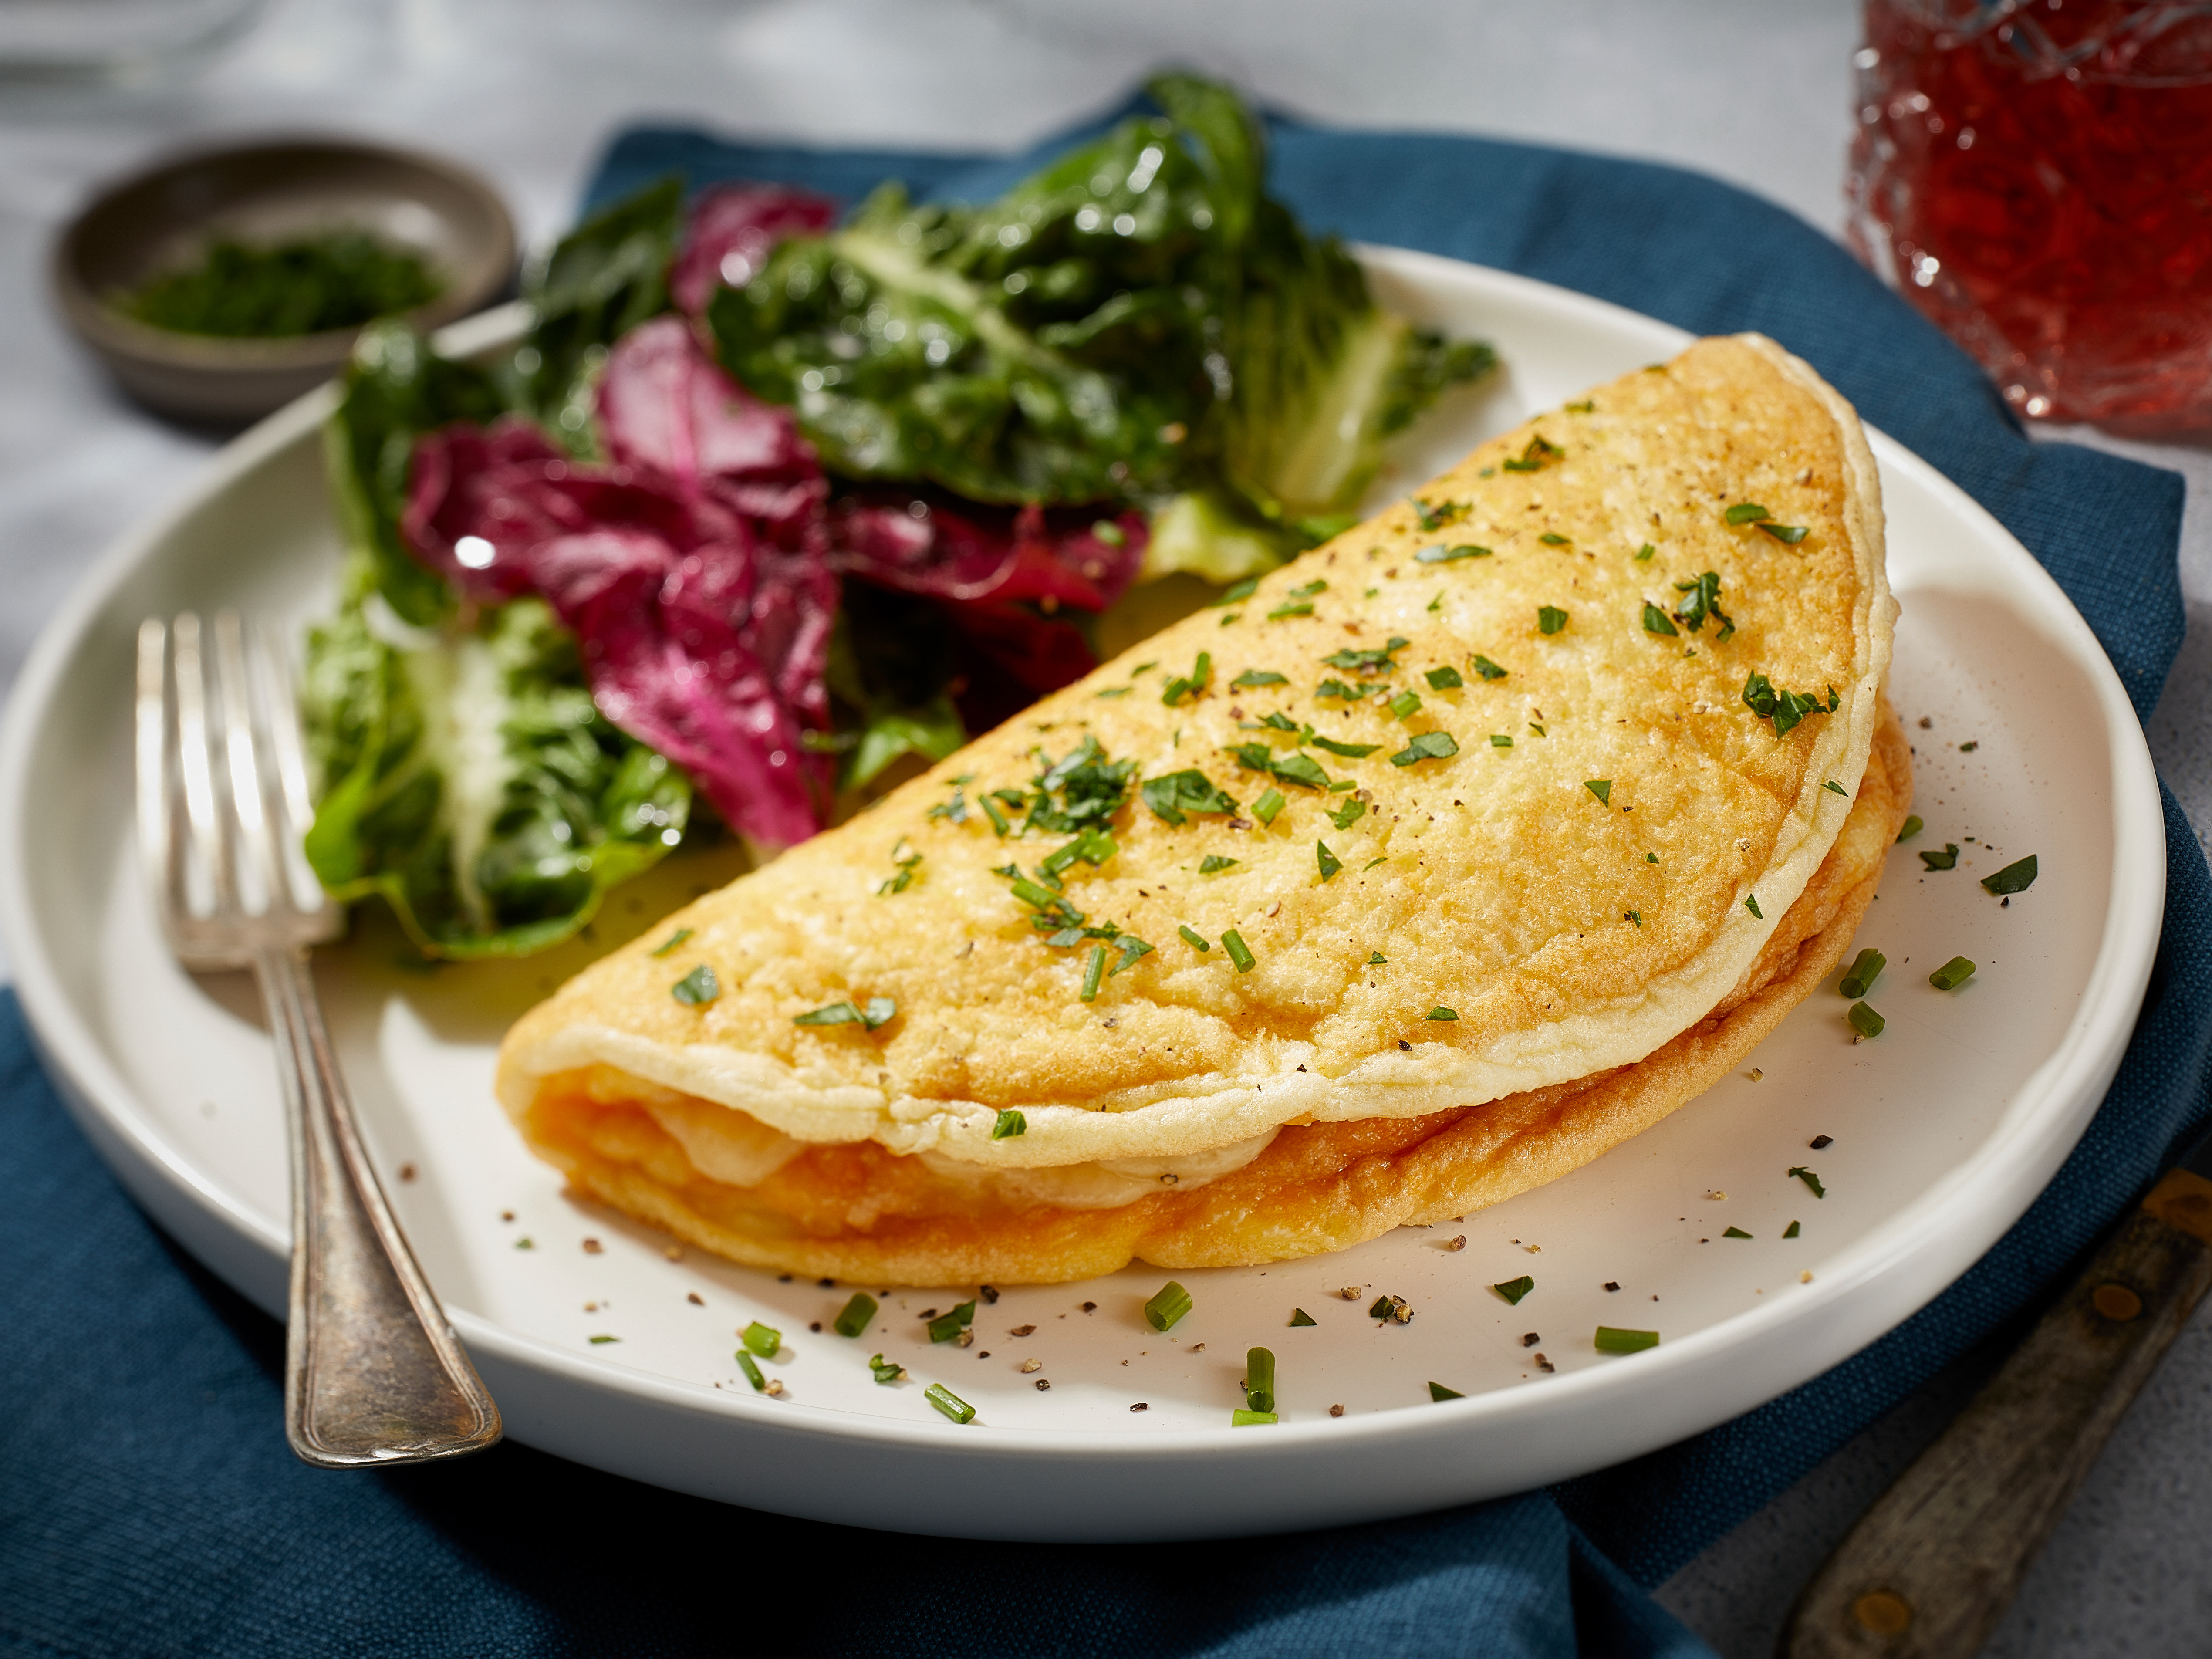 https://www.foodnetwork.com/content/dam/images/food/fullset/2022/01/31/0/FPLF104_mary-berg-omelette-souffle-2_s4x3.jpg